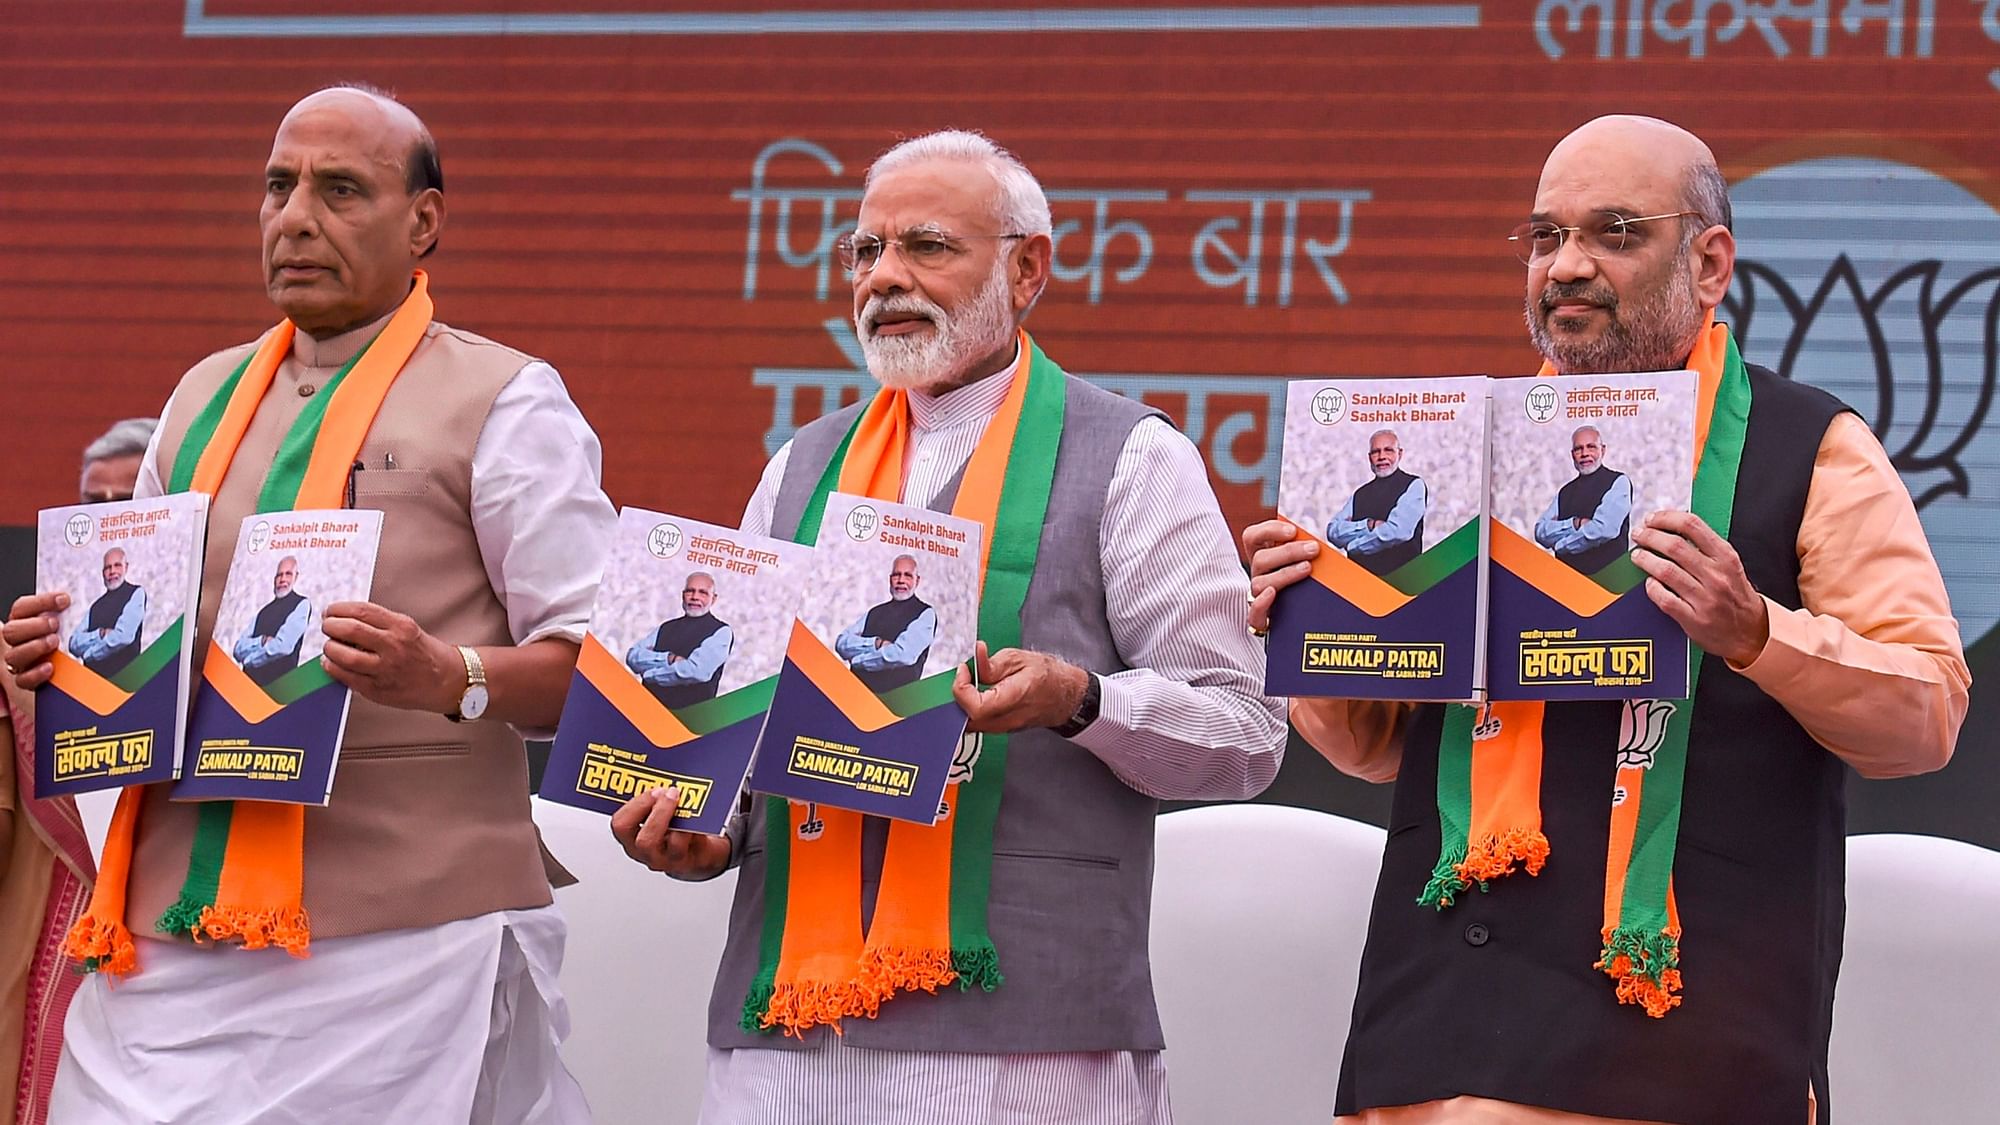 Prime Minister Narendra Modi, BJP President Amit Shah and Union Home Minister Rajnath Singh release Bharatiya Janata Party’s (BJP) manifesto (<i>Sankalp Patra</i>) for the Lok Sabha elections 2019.